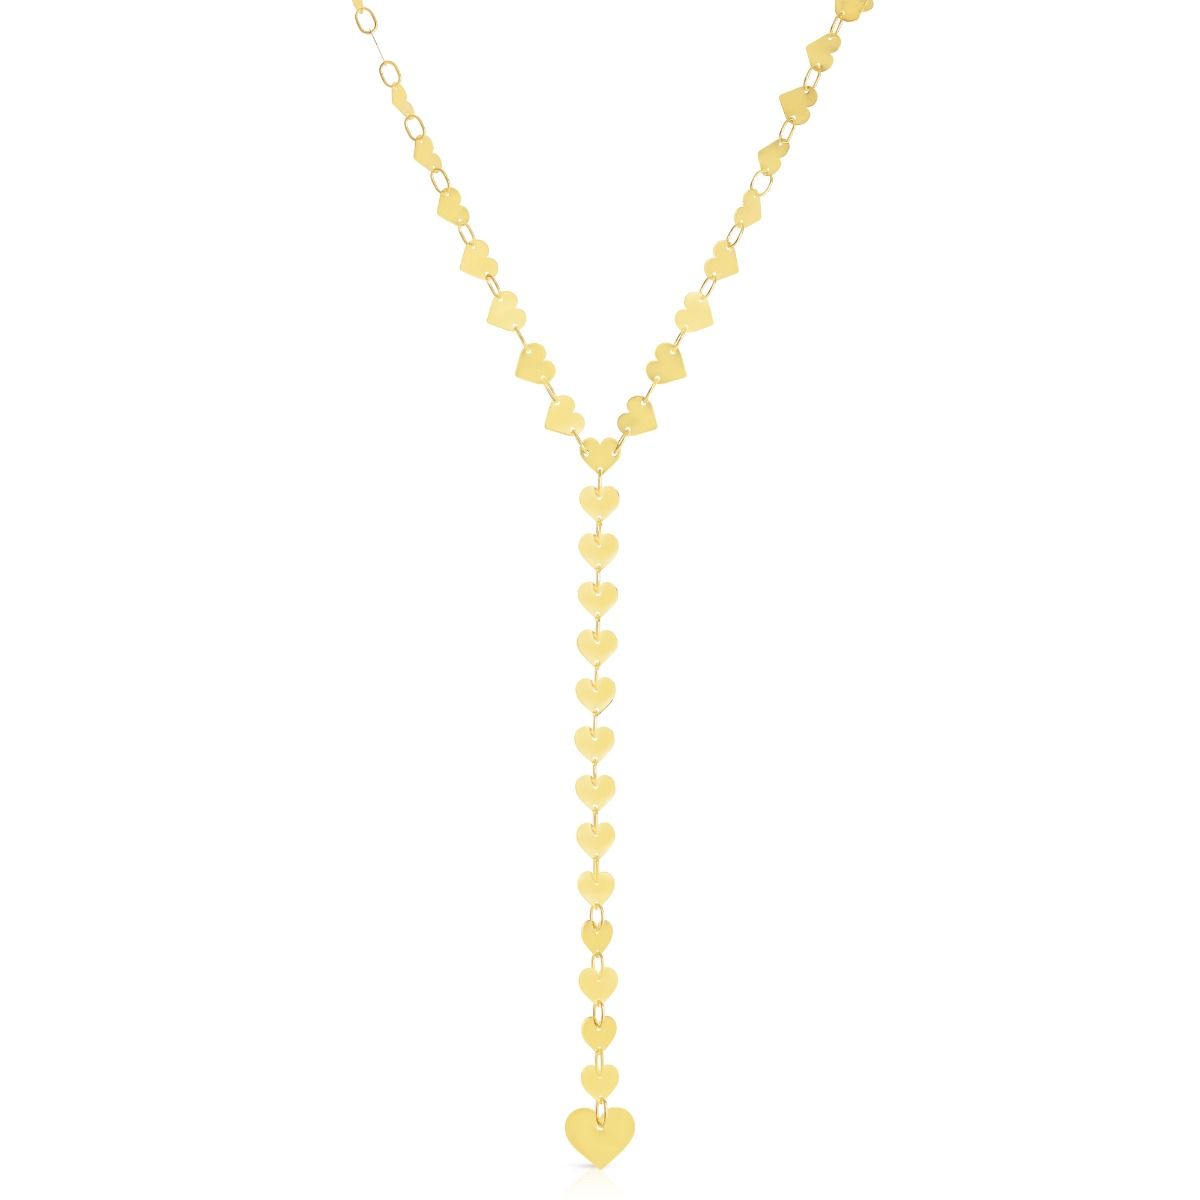 6mm Heart Shape Link Chain Necklace - 925 Sterling Silver - Open Heart  Outline Links - FashionJunkie4Life